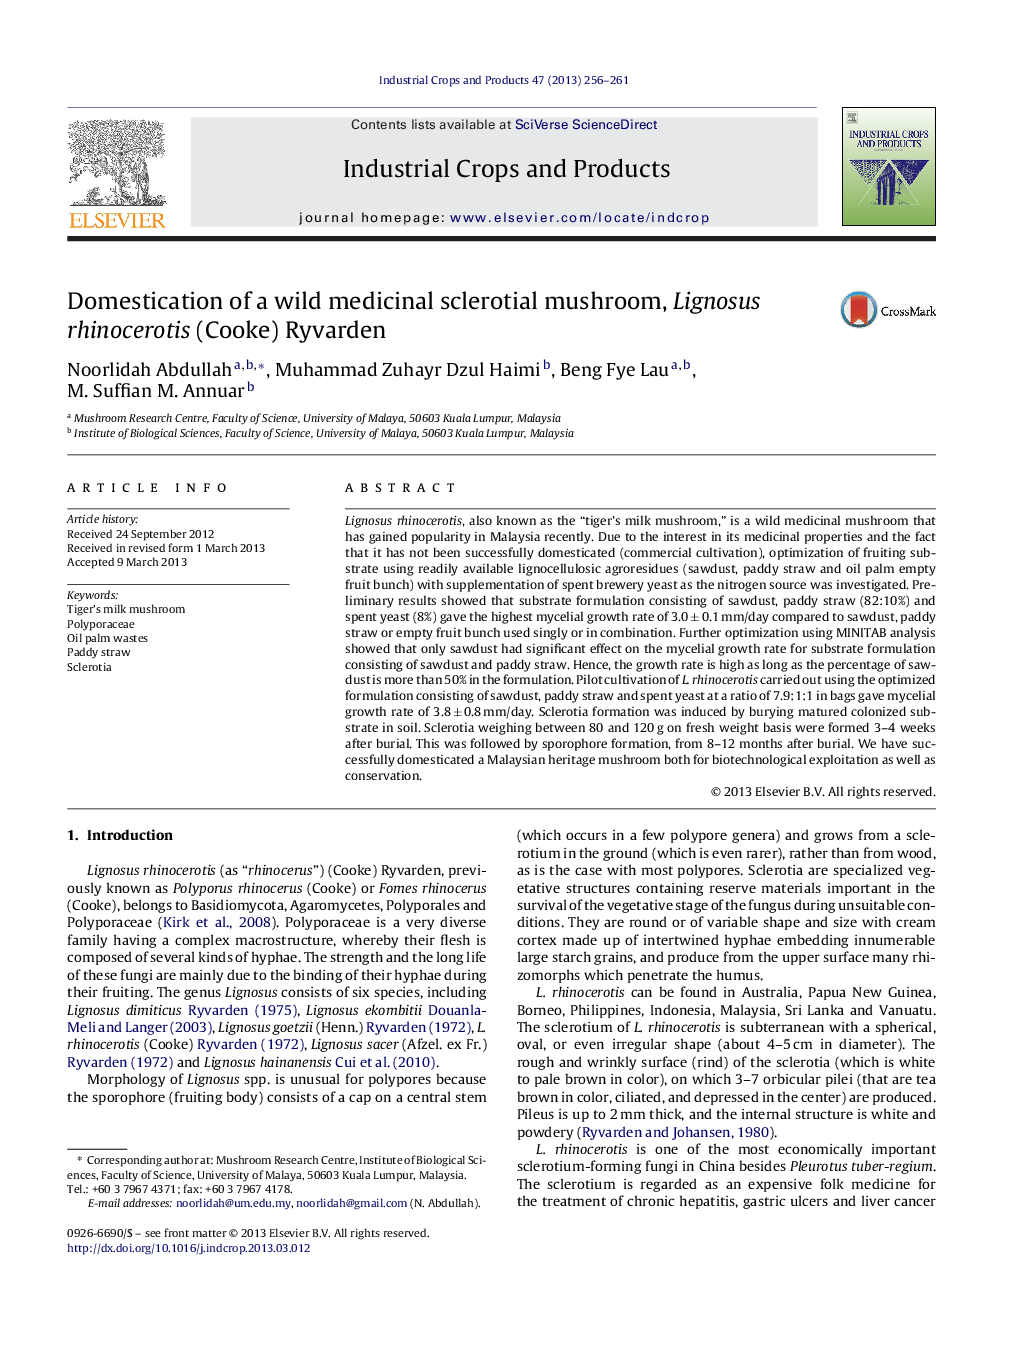 Domestication of a wild medicinal sclerotial mushroom, Lignosus rhinocerotis (Cooke) Ryvarden